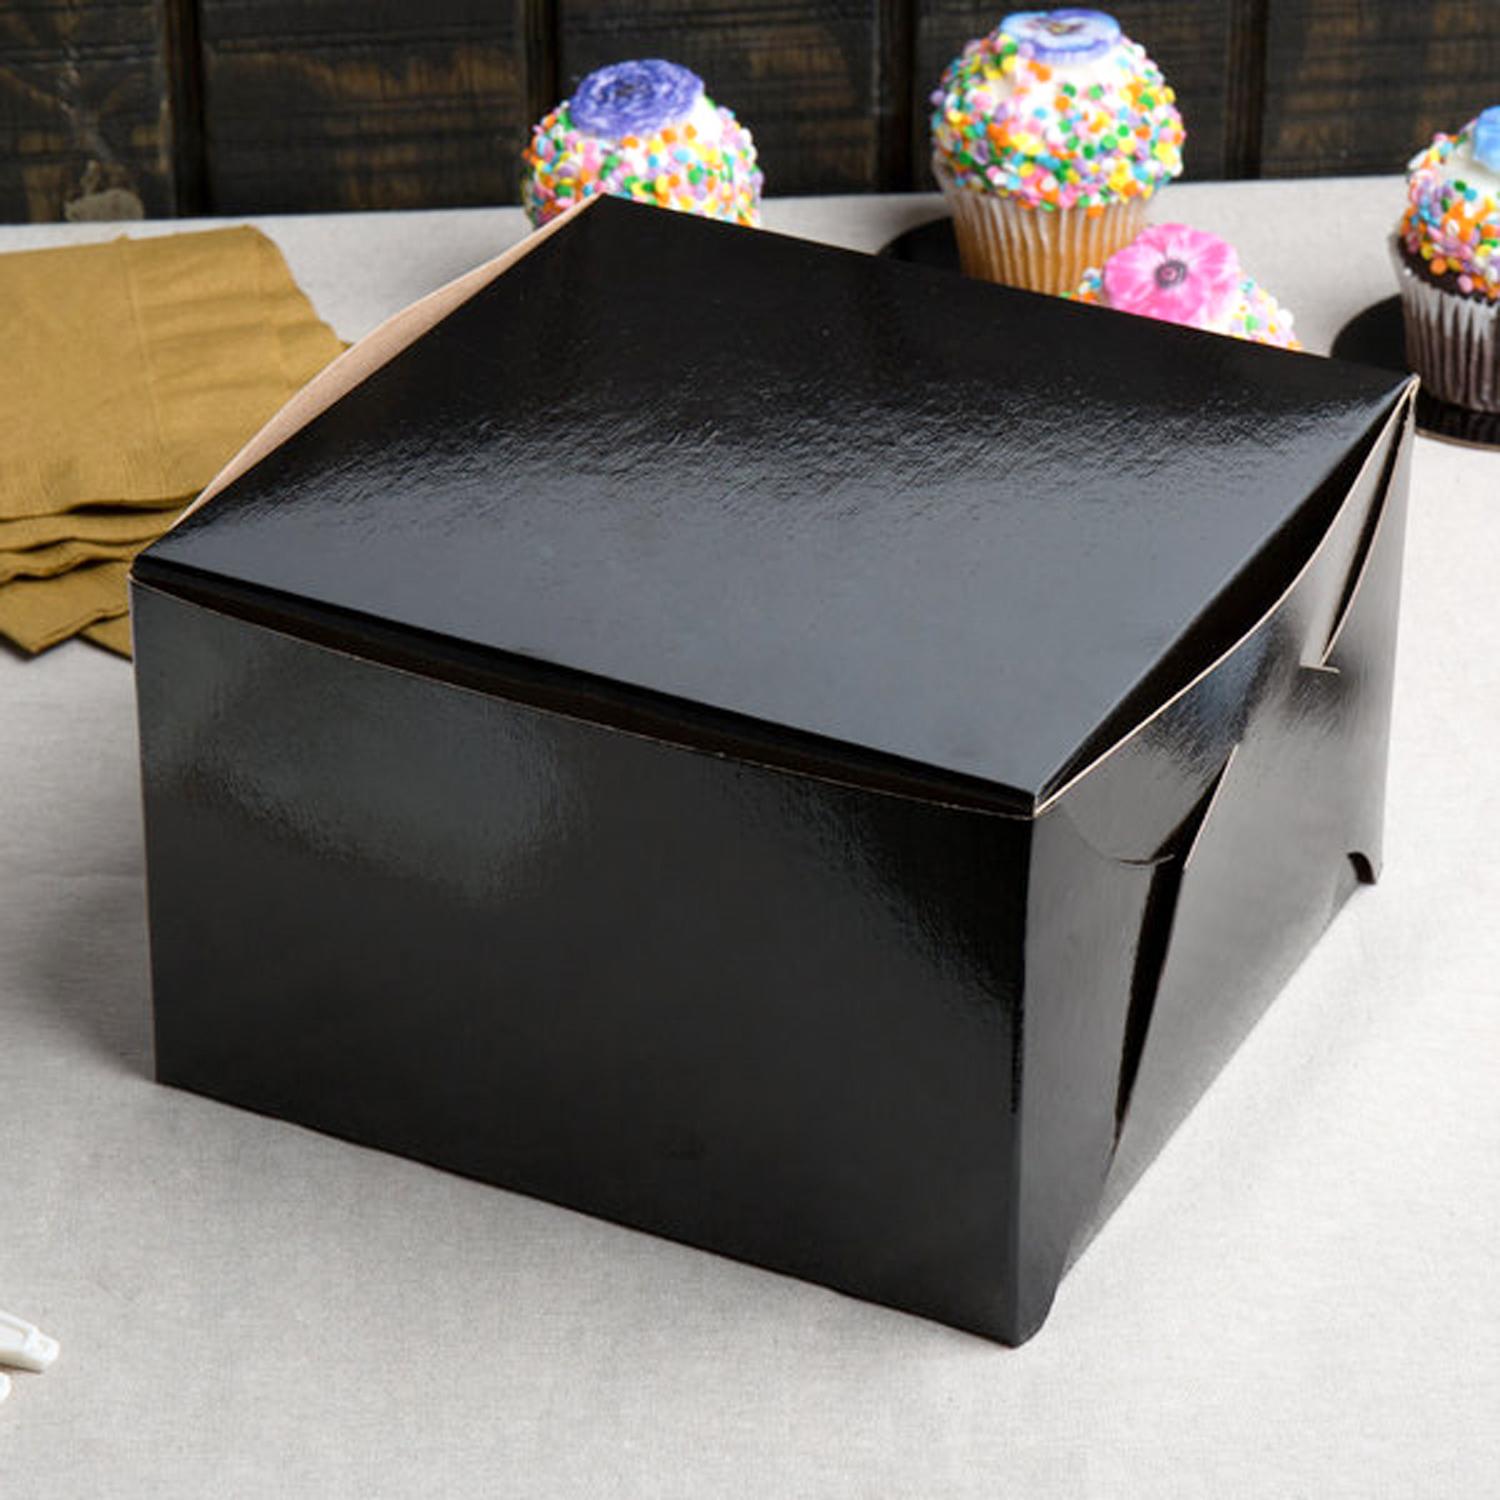 BLACK 8 X 8 X 4 INCHES CAKE BOX